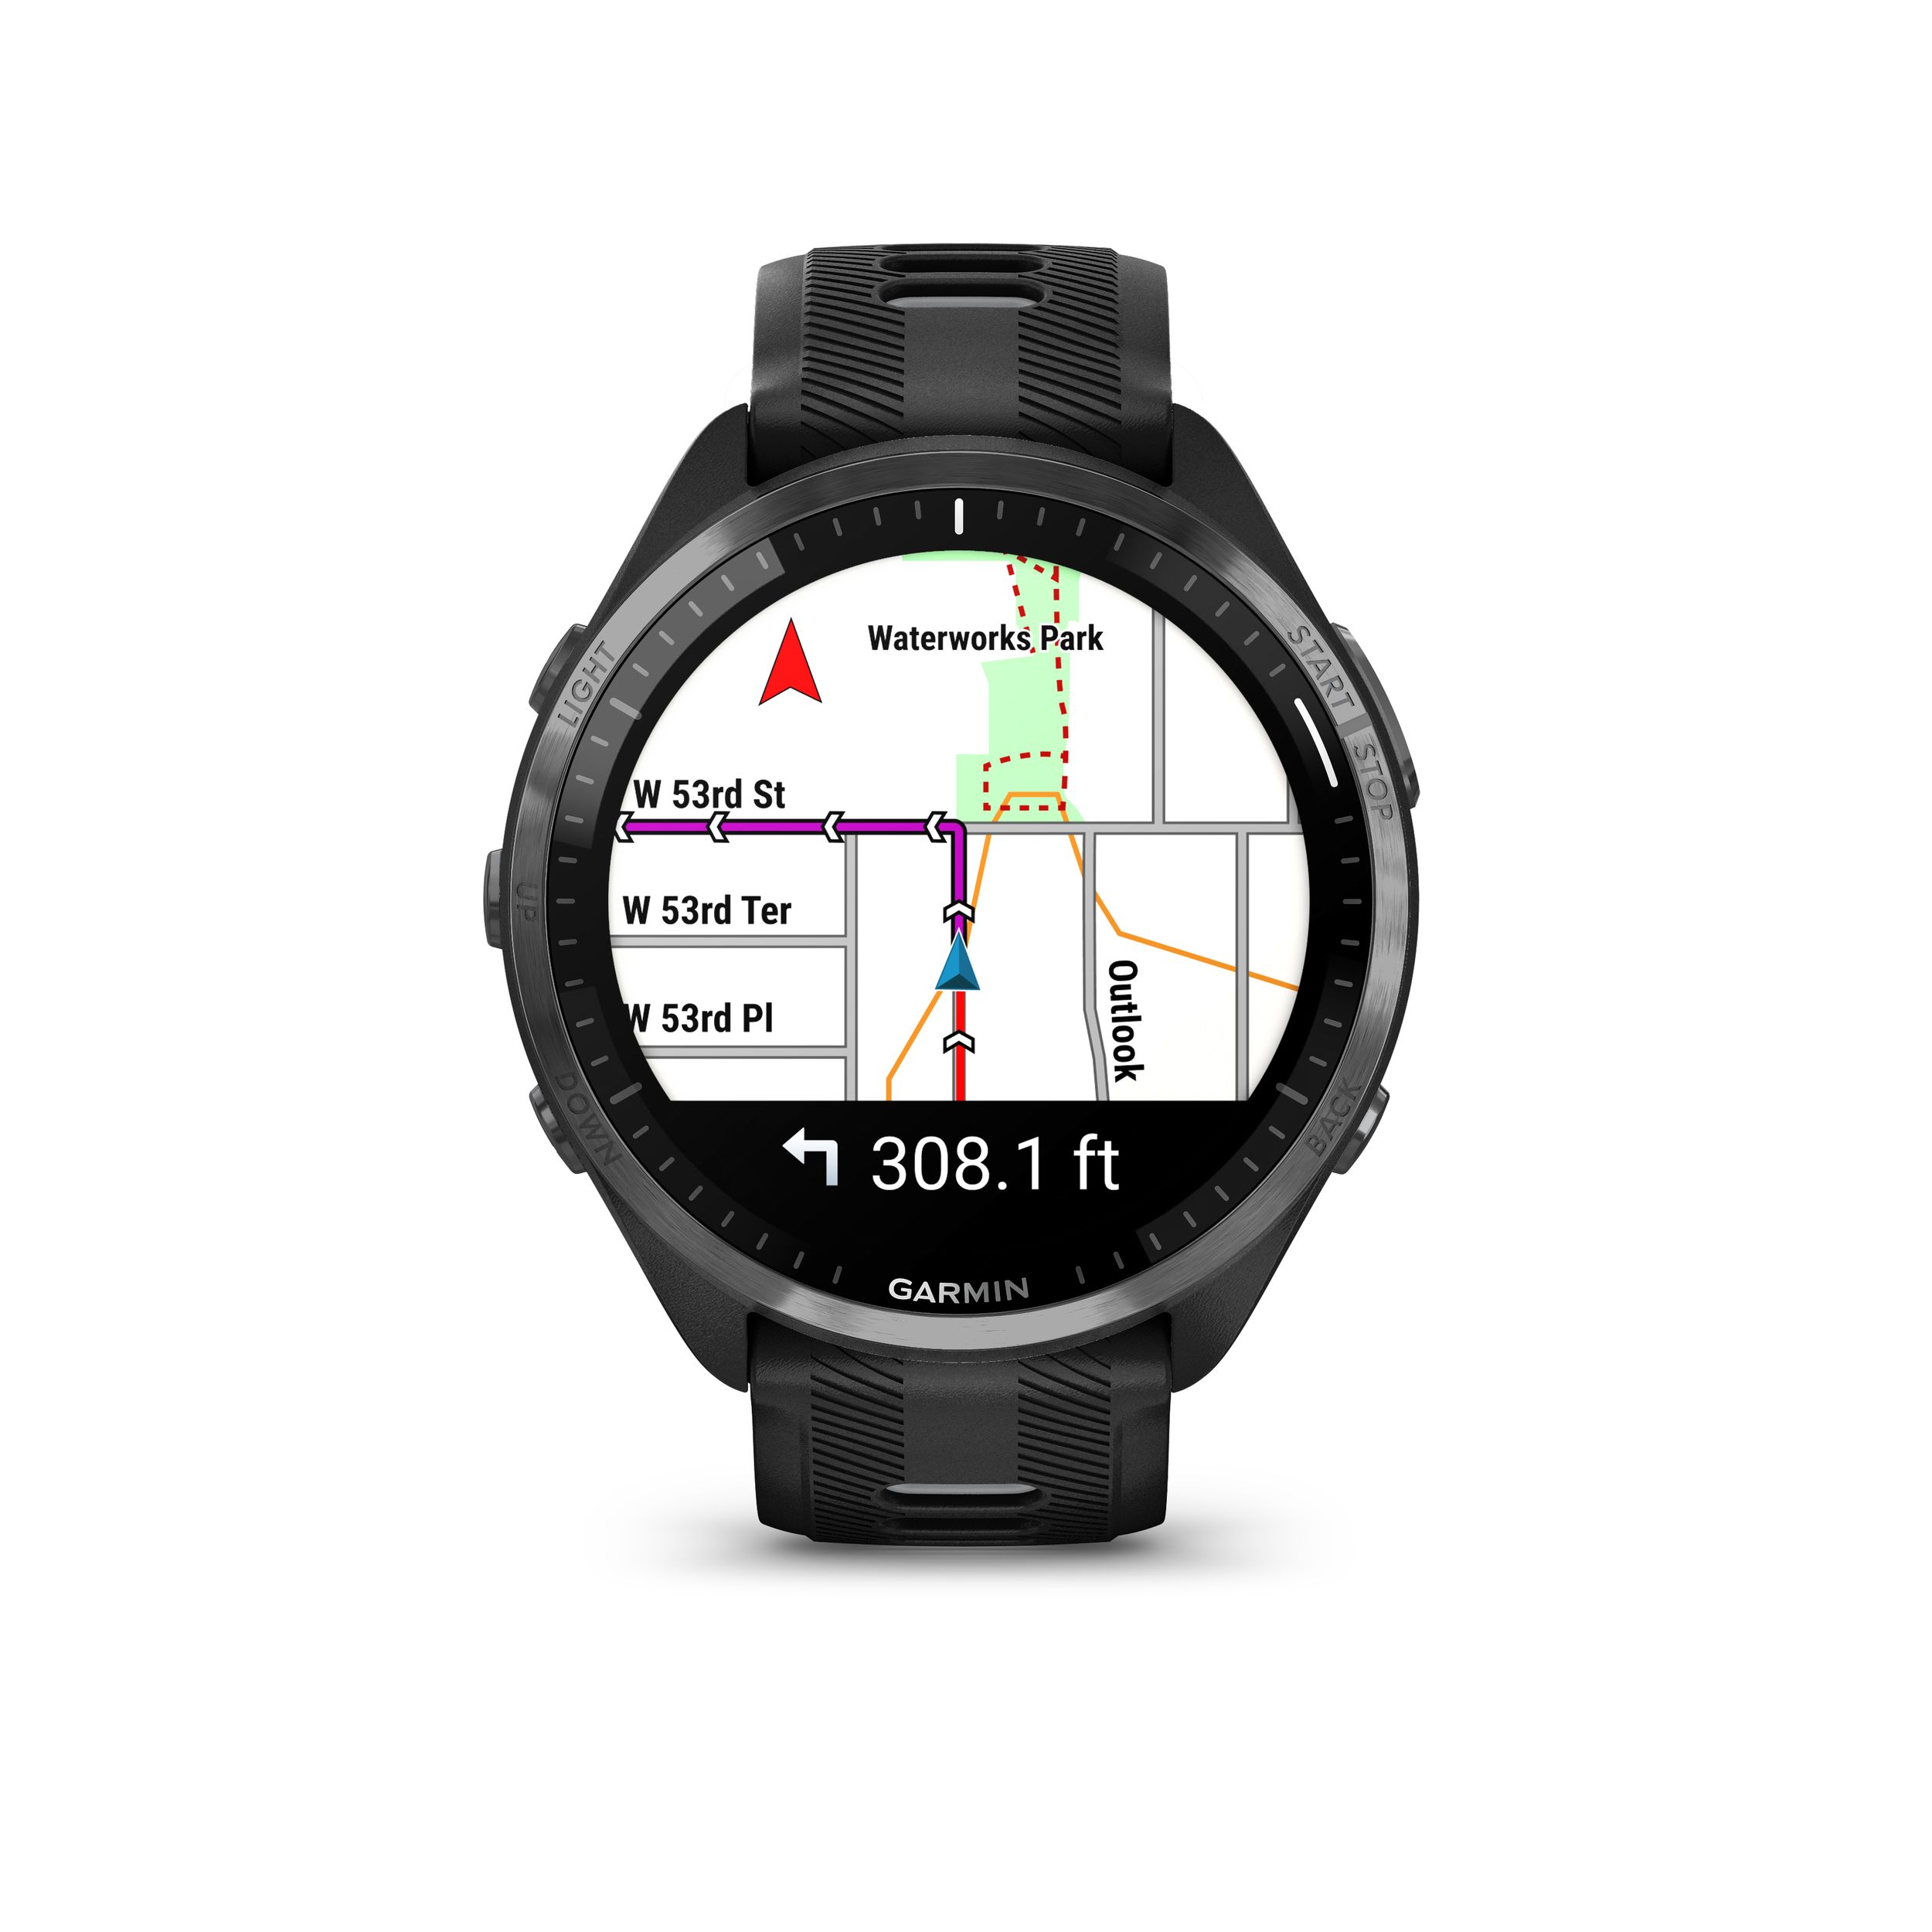 Garmin Forerunner 965, Forerunner 265 Series Smartwatches Launched